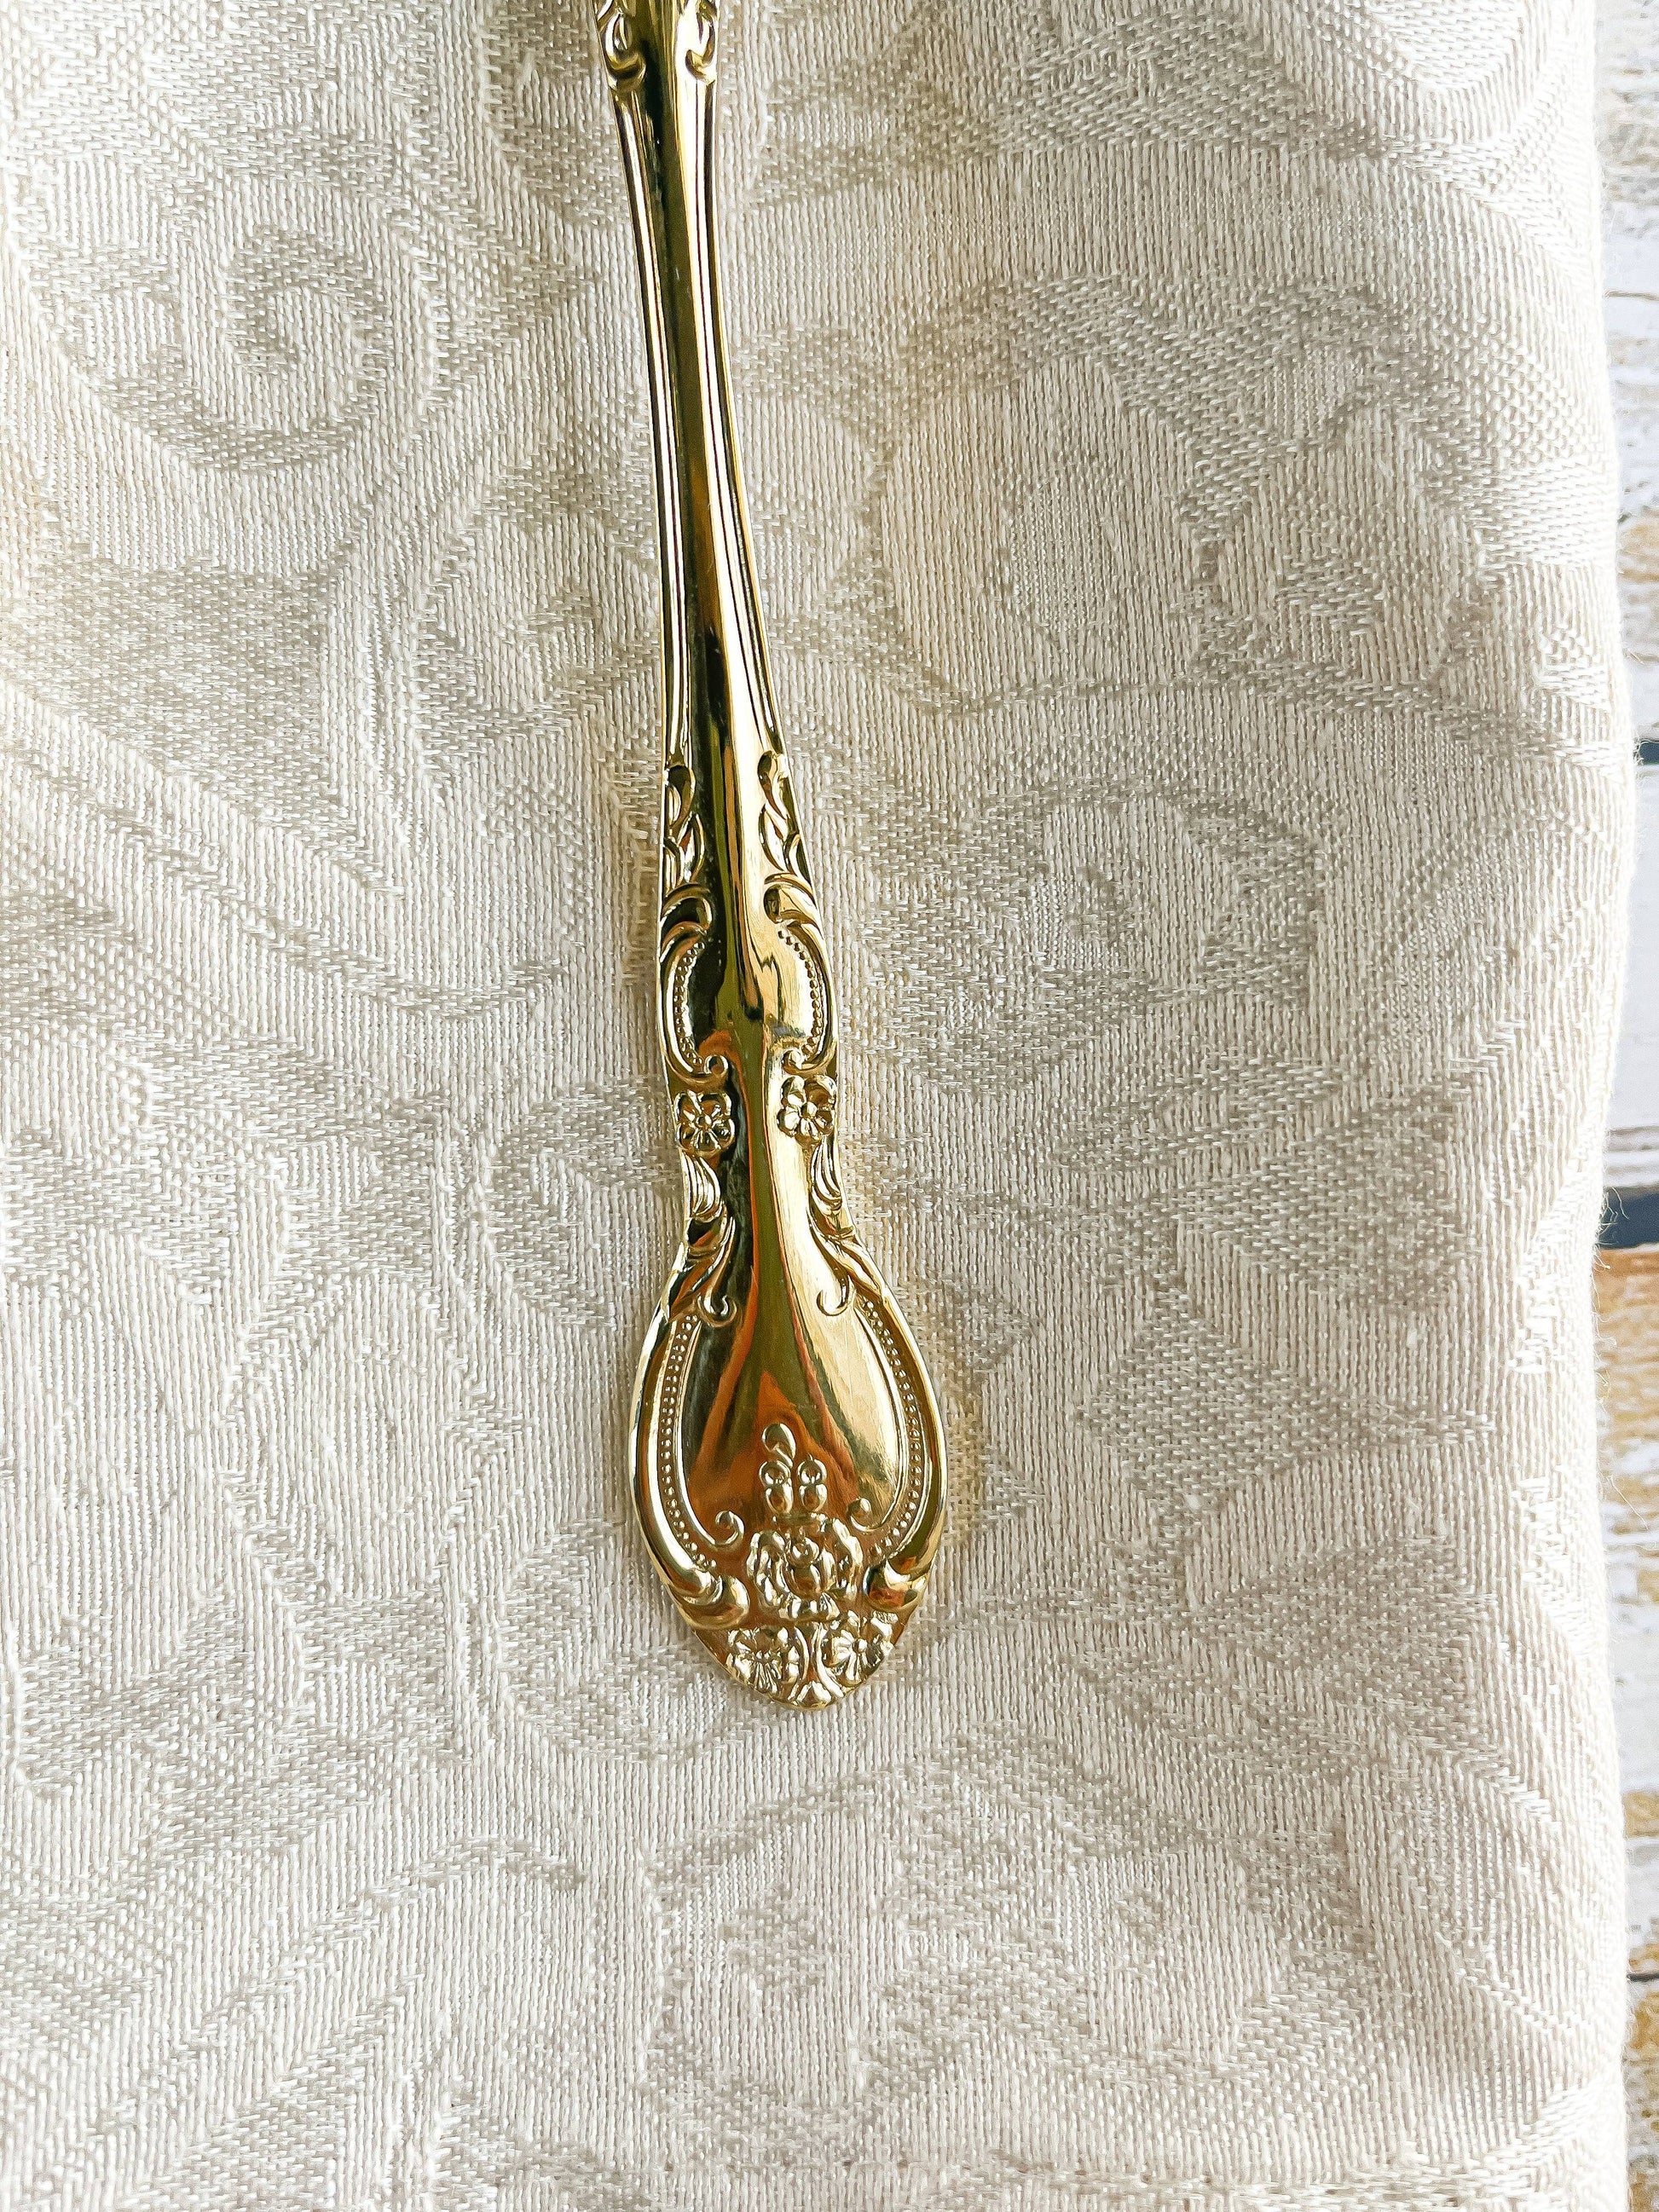 Oneida Gold-Plated Set of 6 Dessert/Place Spoons - 'Golden Malmaison' Pattern - SOSC Home